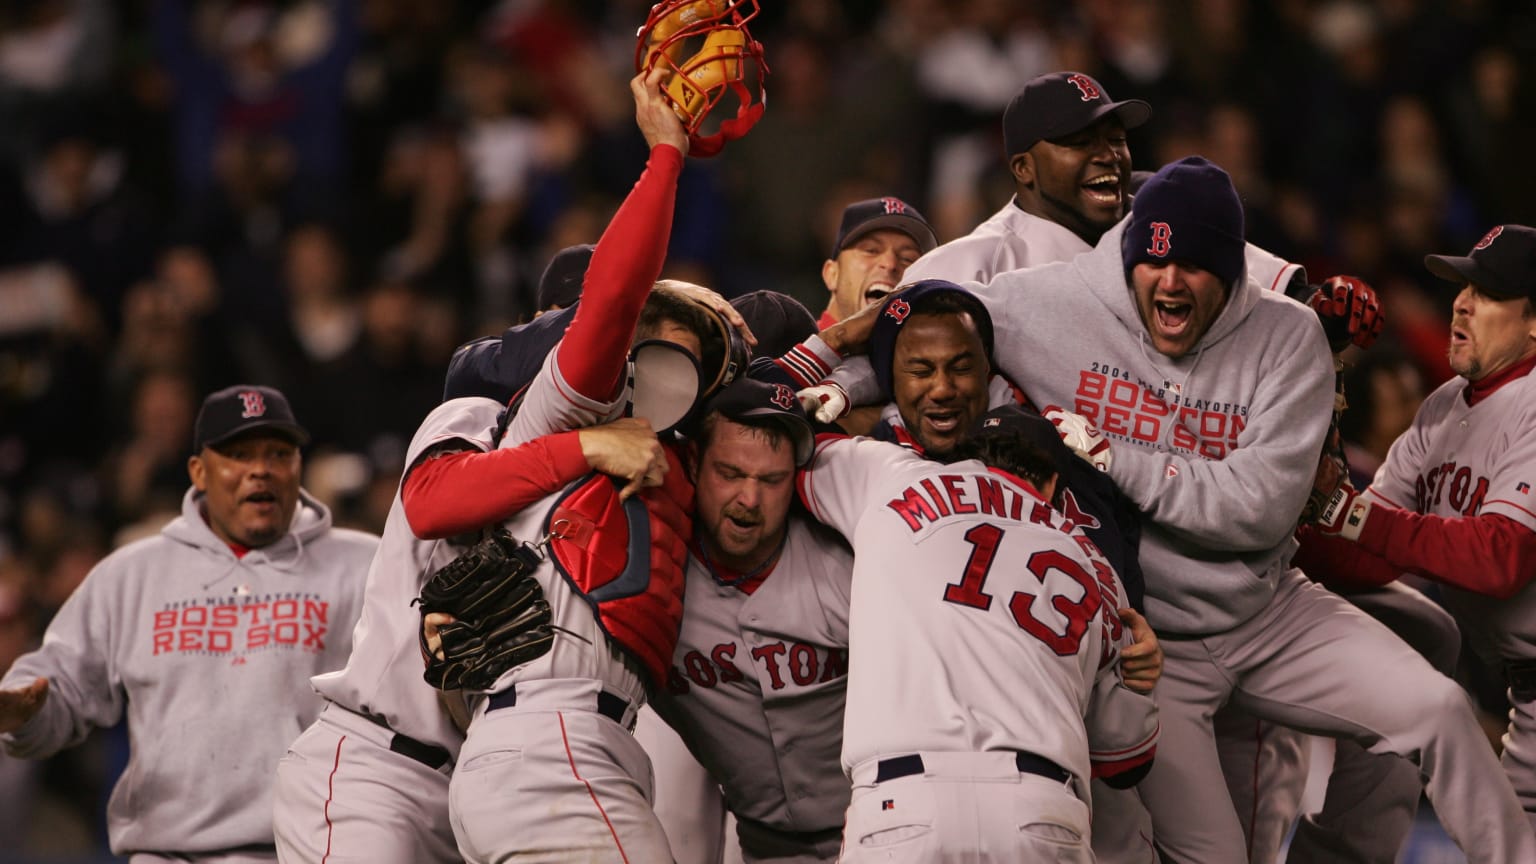 The Boston Red Sox celebrate in 2004